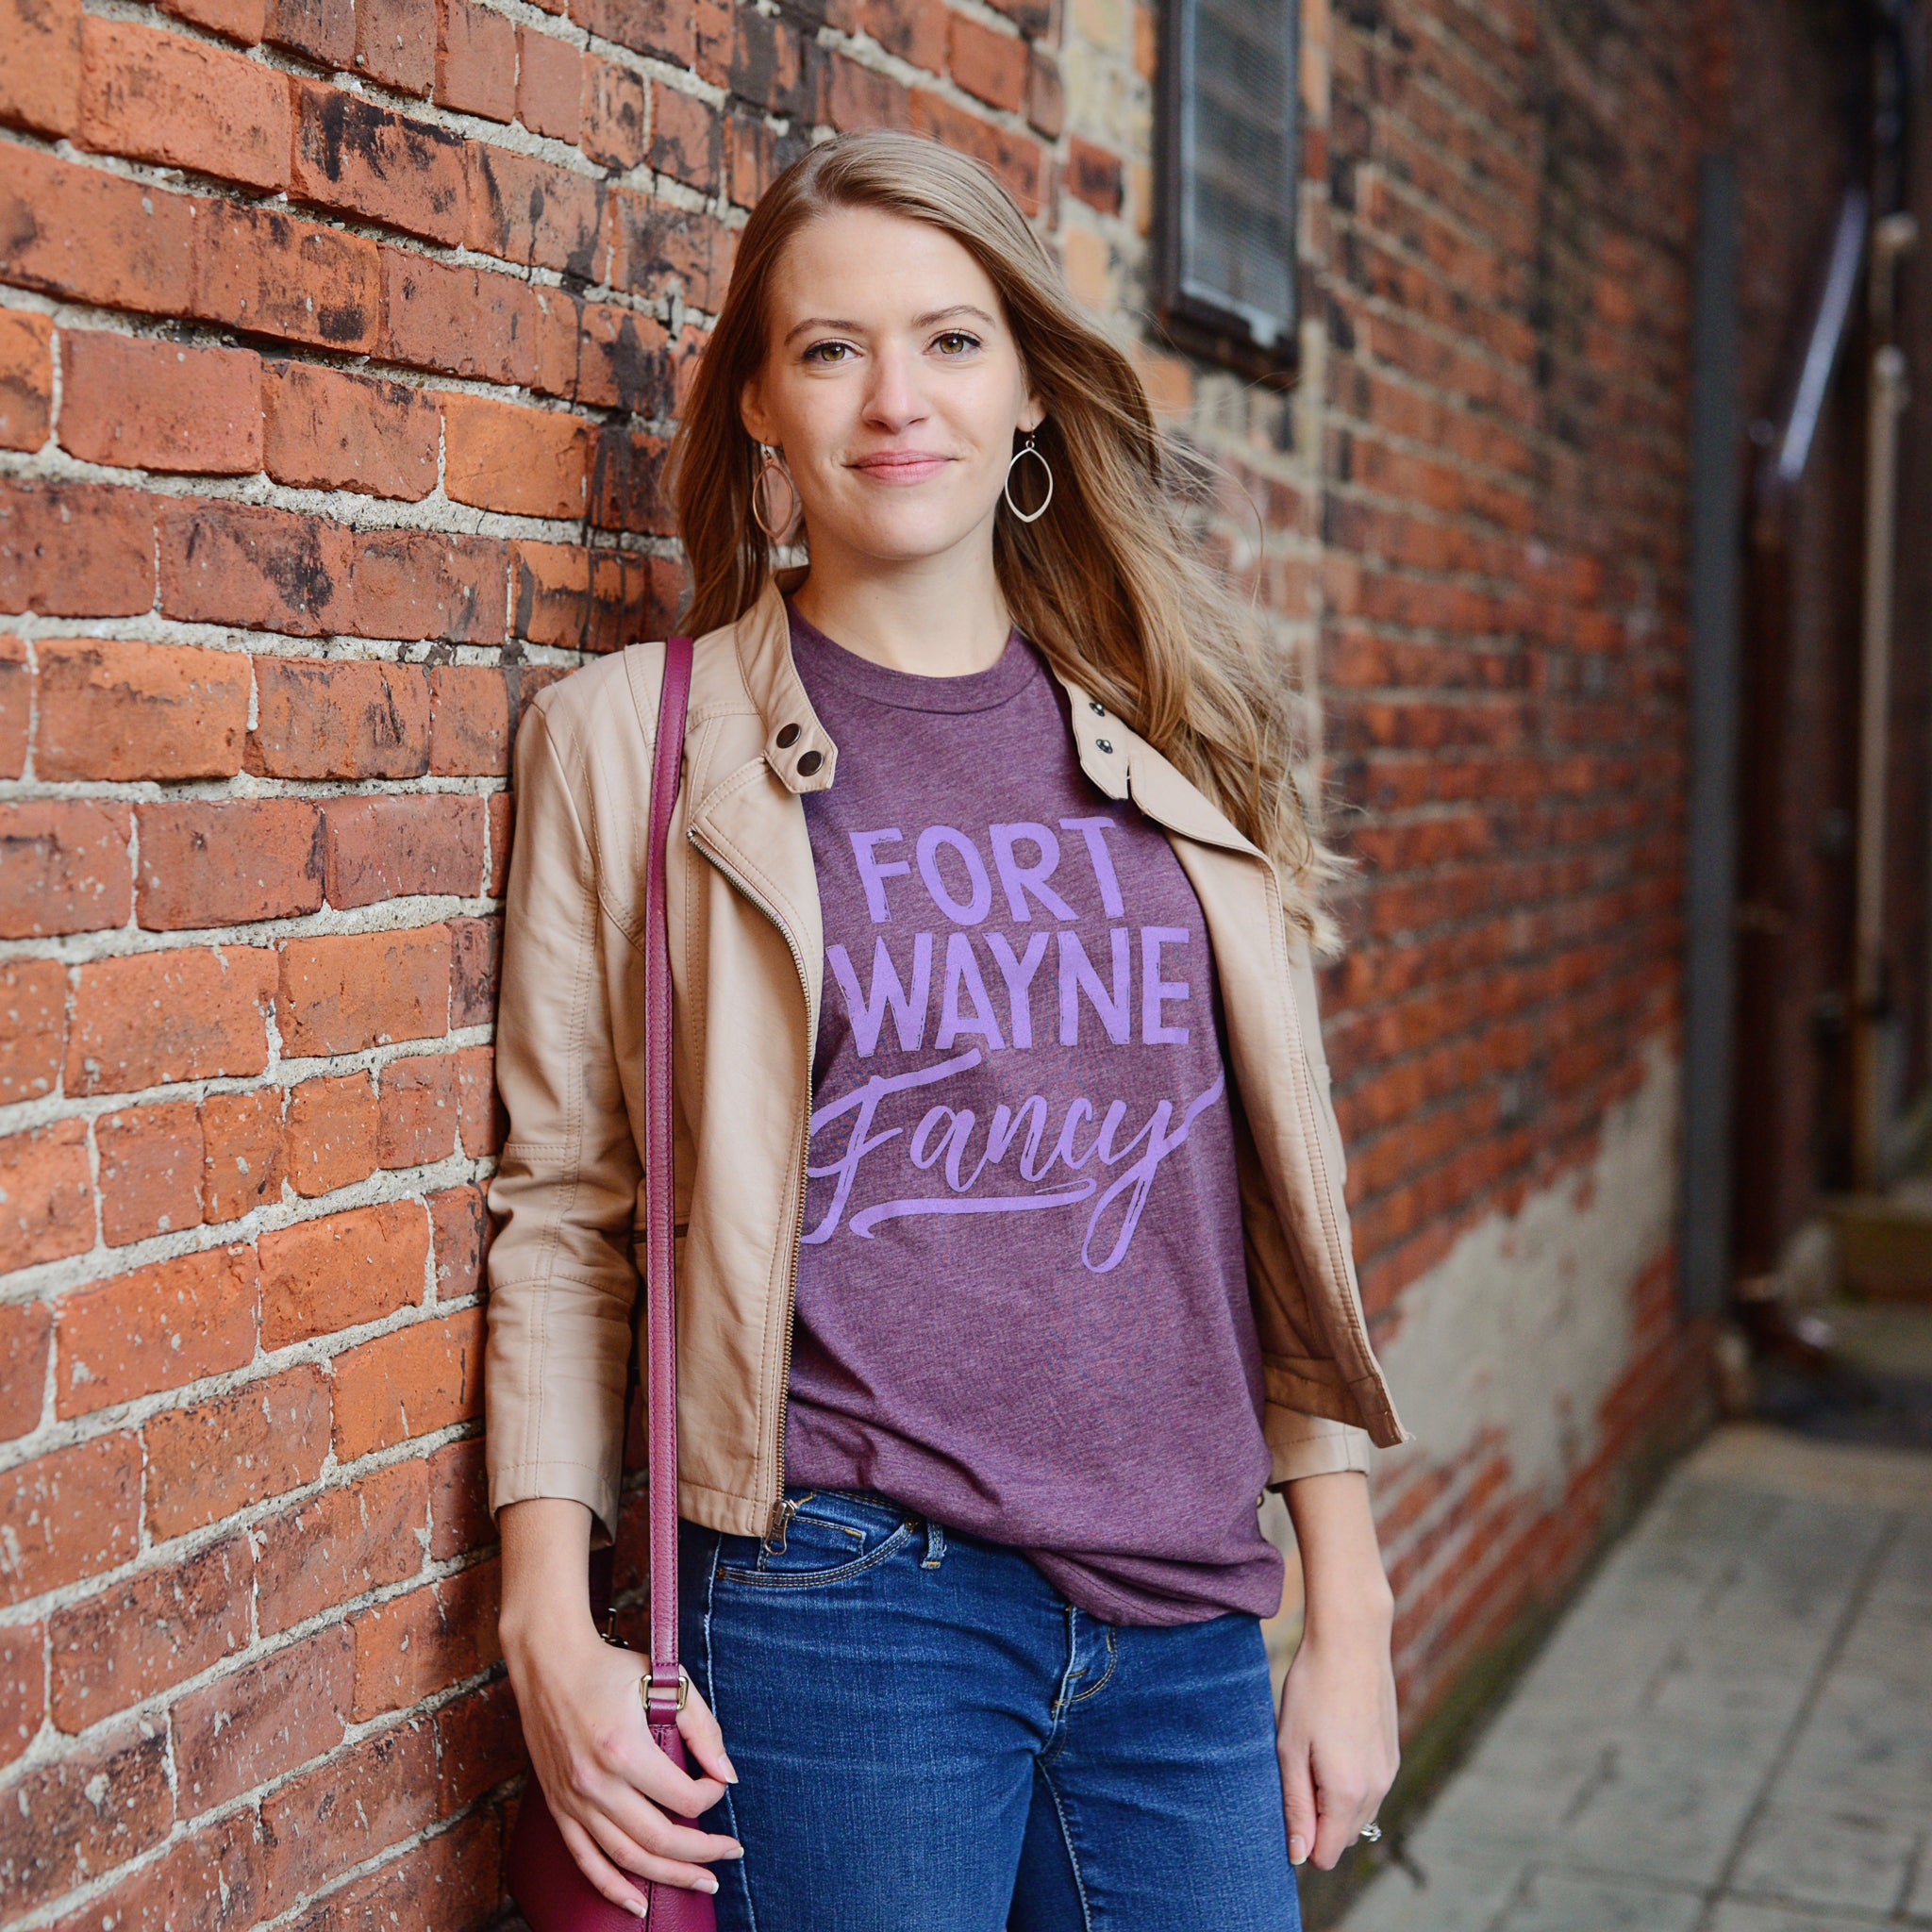 Fort Wayne Fancy plum heather t-shirt on model by brick wall